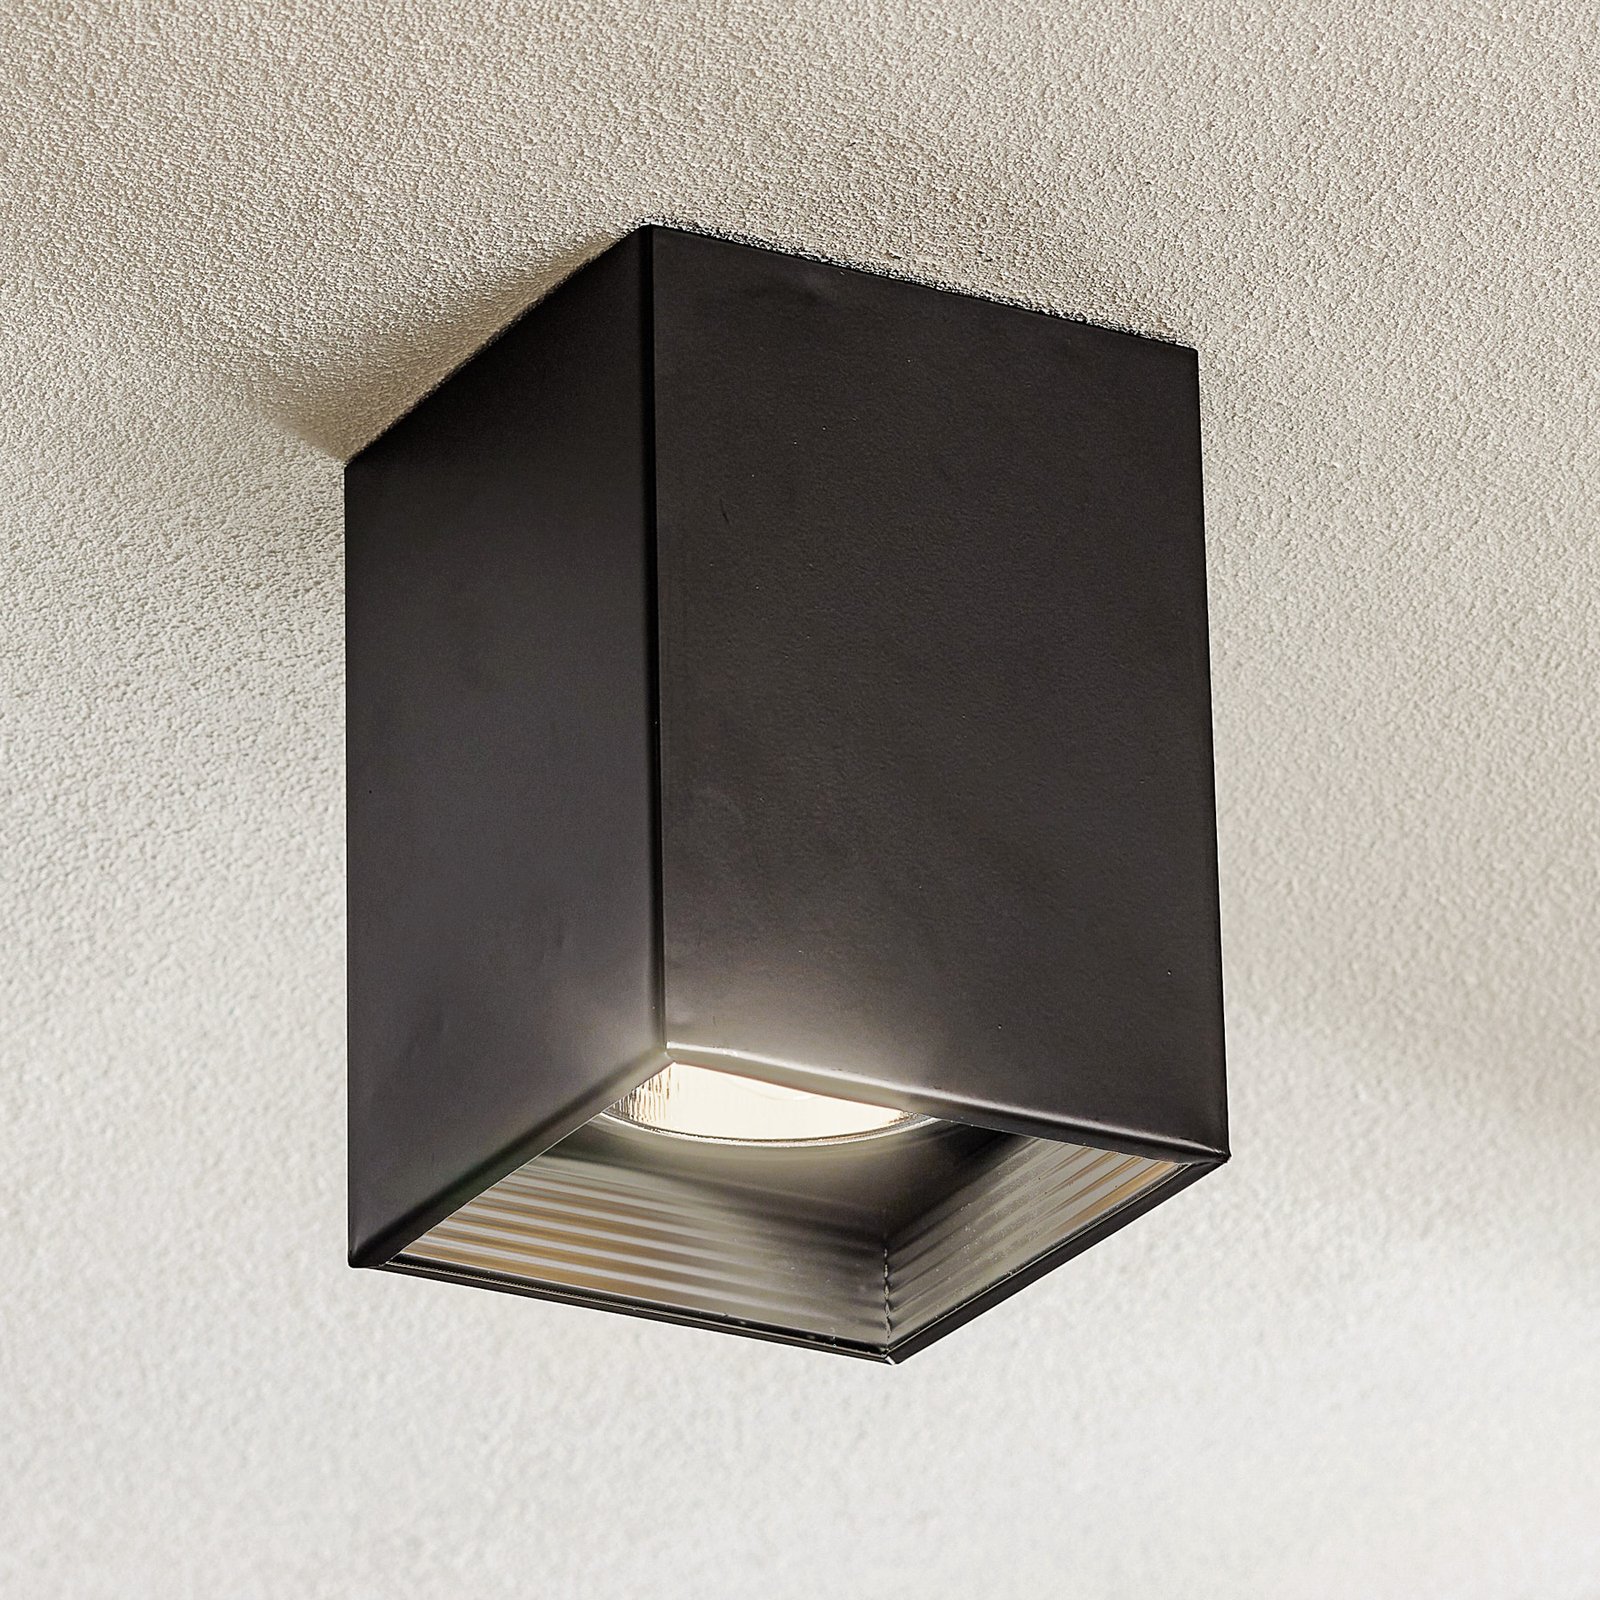 Plafondspot downlight square zwart, breedte 11,5cm